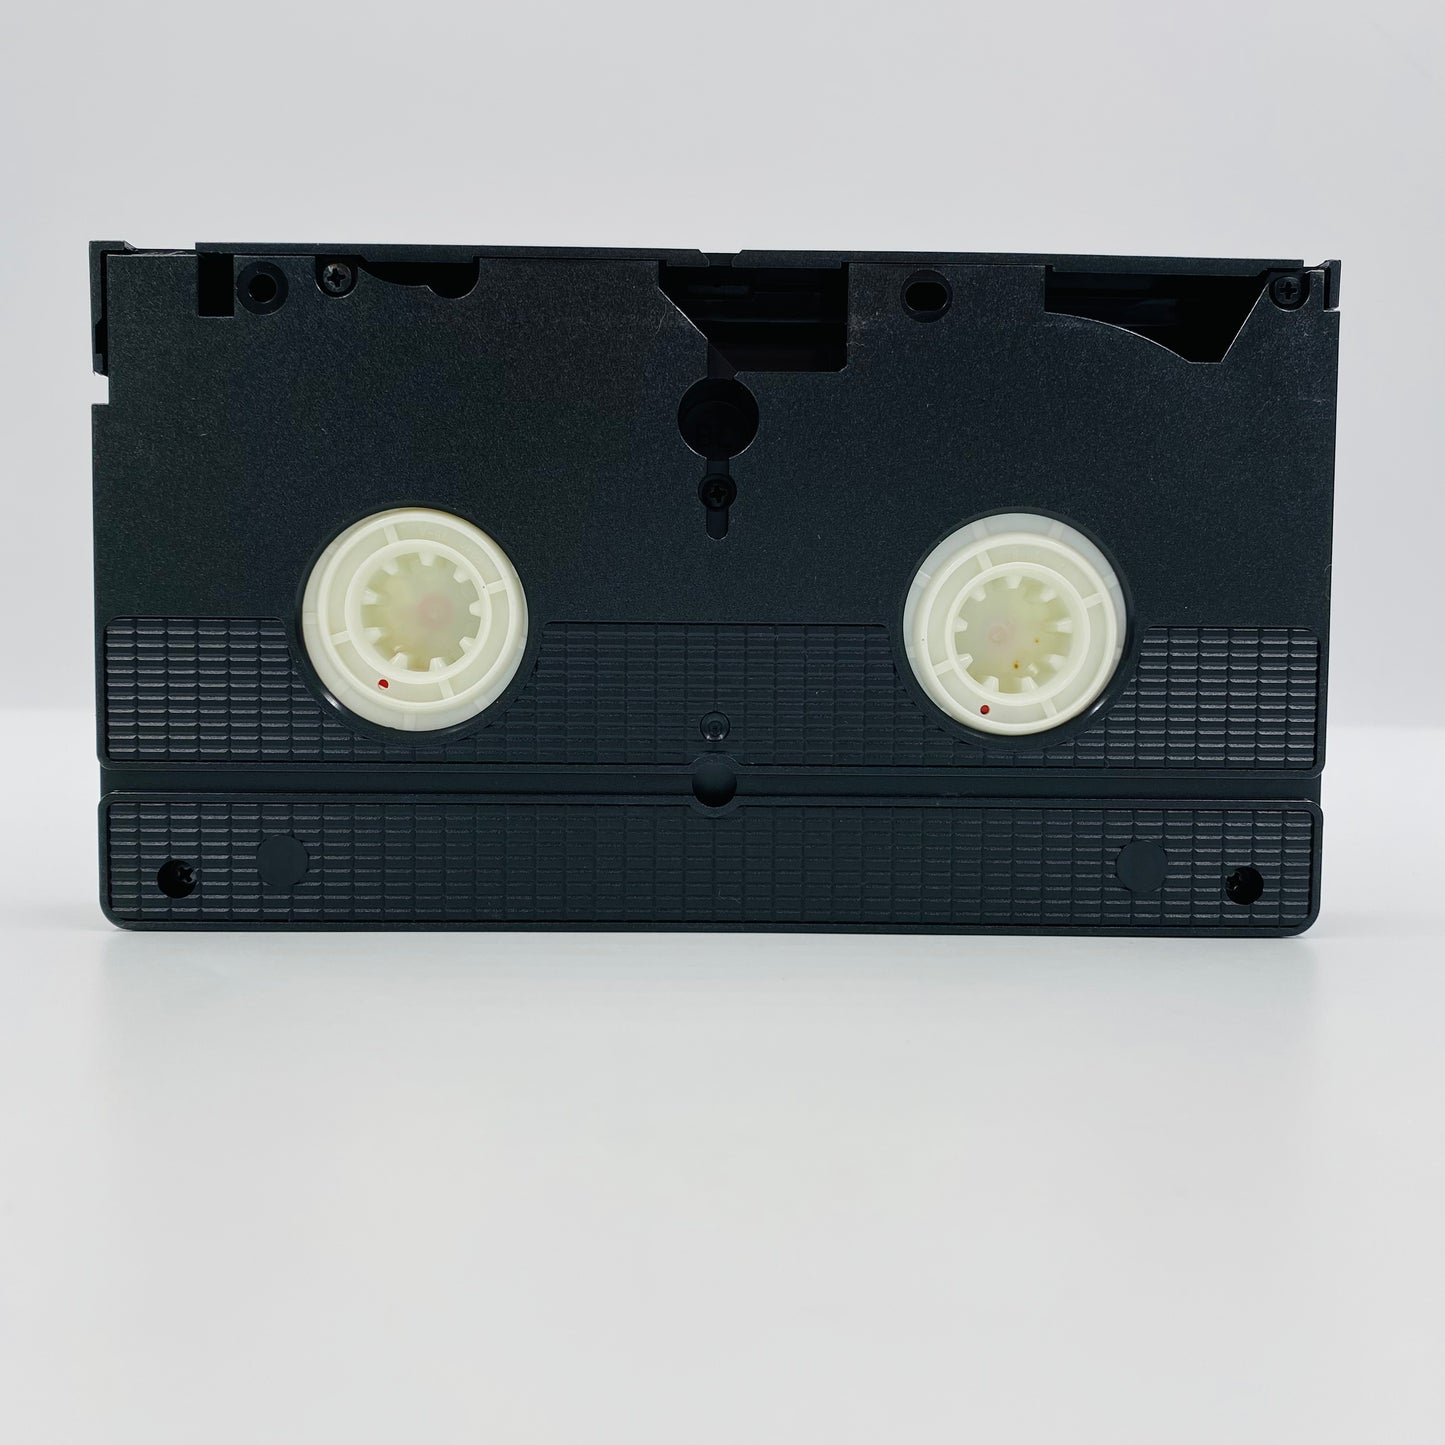 A Christmas Story VHS tape (1998) Metro Goldwyn Mayer Home Entertainment